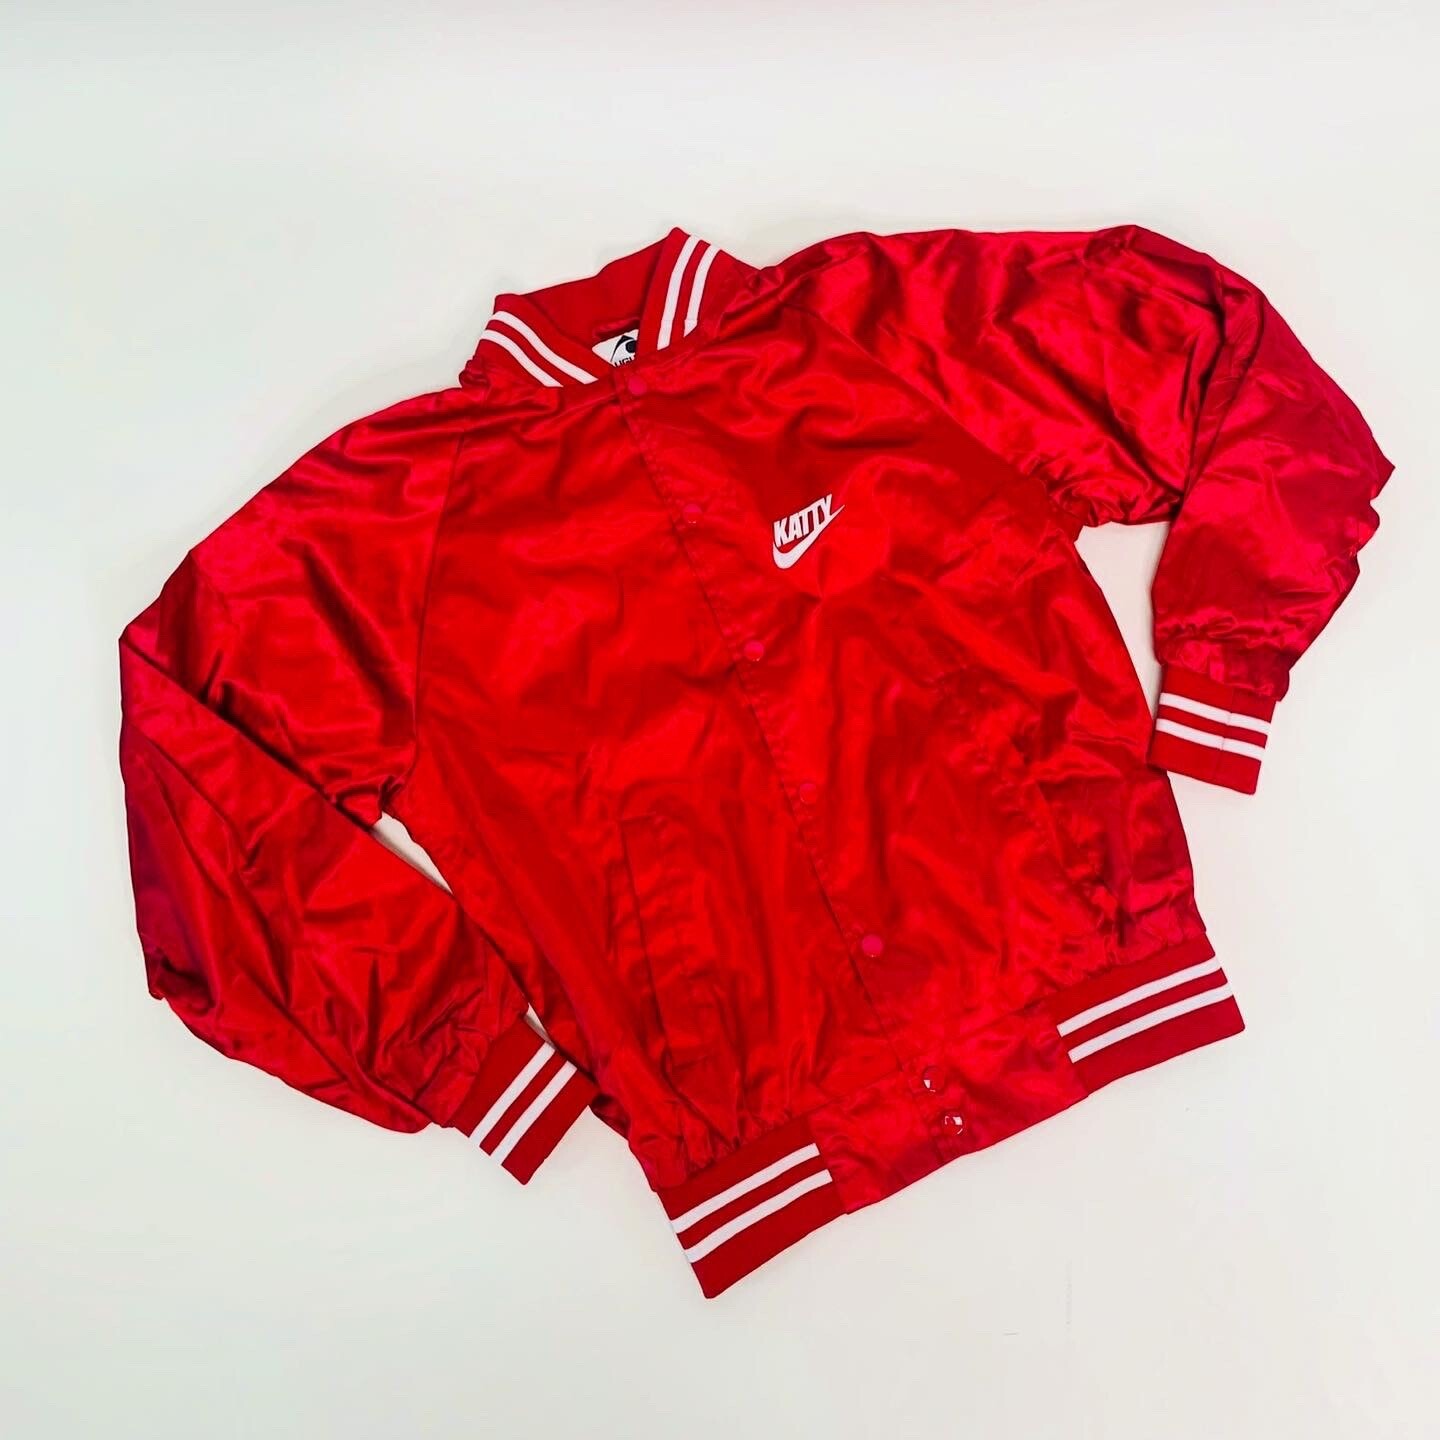 Red Katty/ Nike Sports Jacket